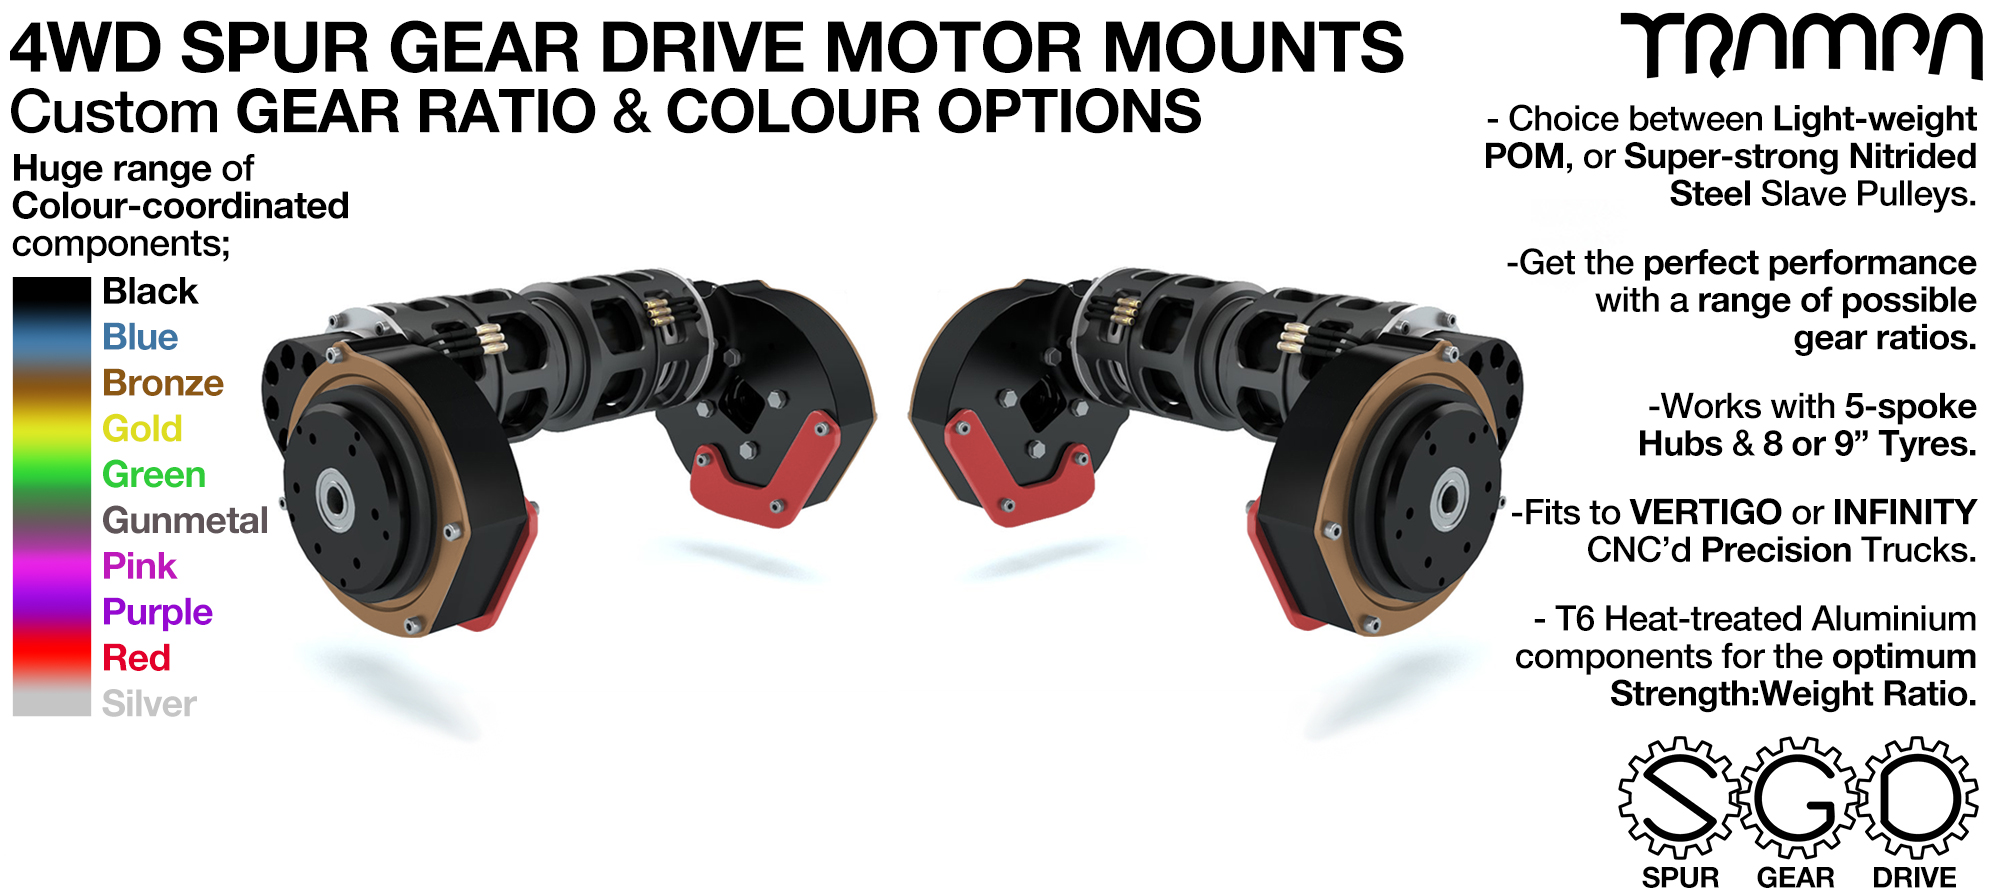 TRAMPA Electric 4WD Spur Gear Drive Mountainboard Motor Mount kit with 4x Custom Motors